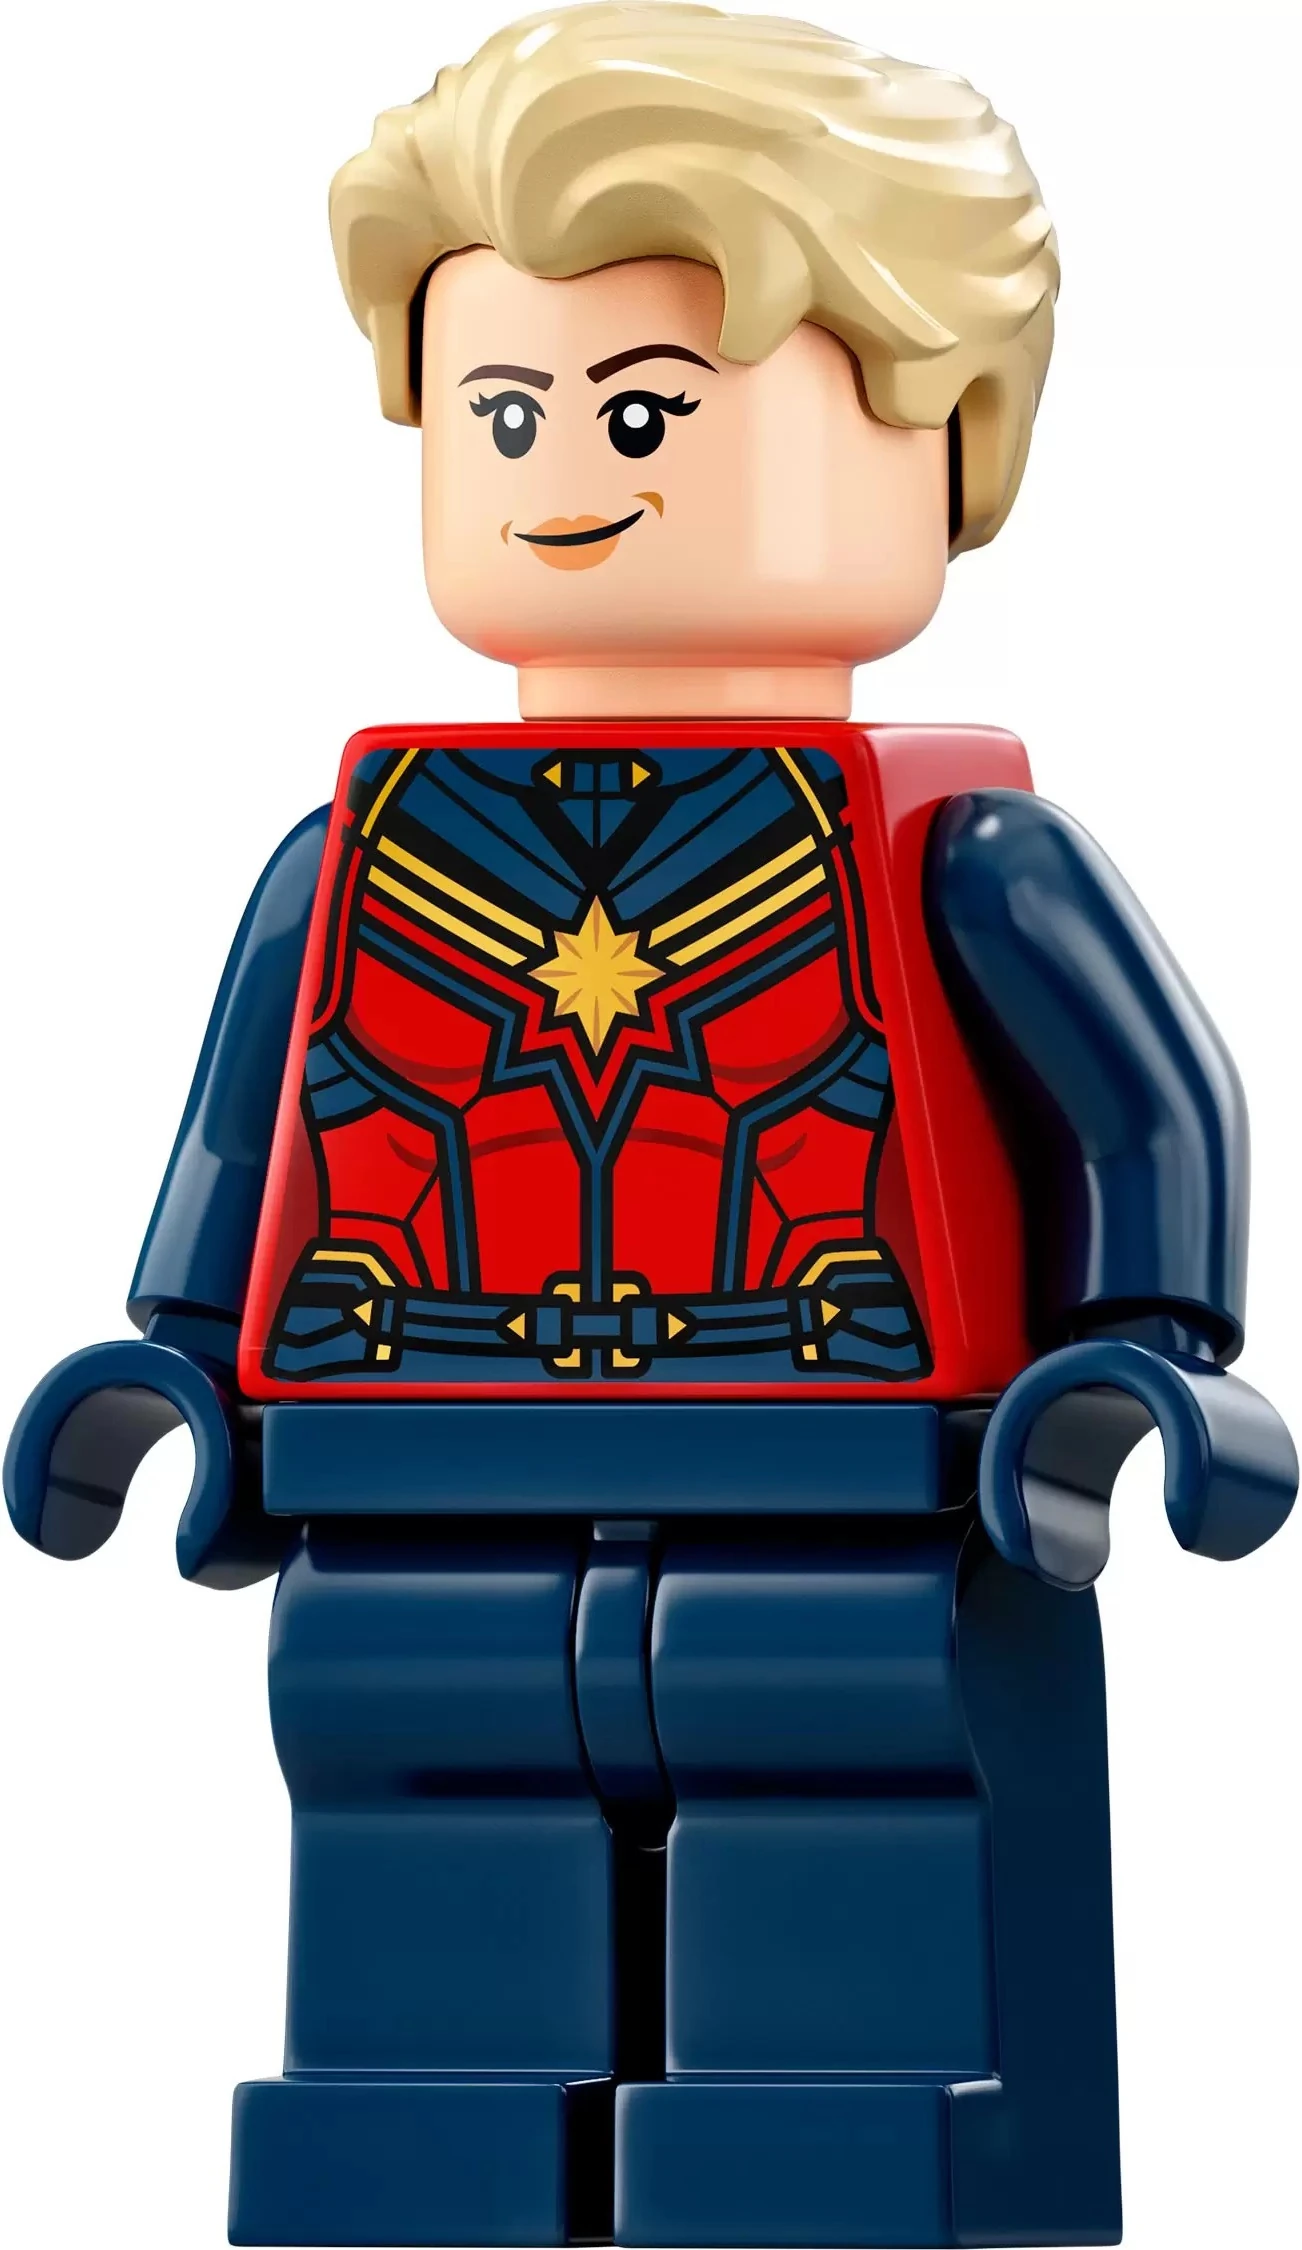 Captain Marvel (Carol Danvers), Brickipedia